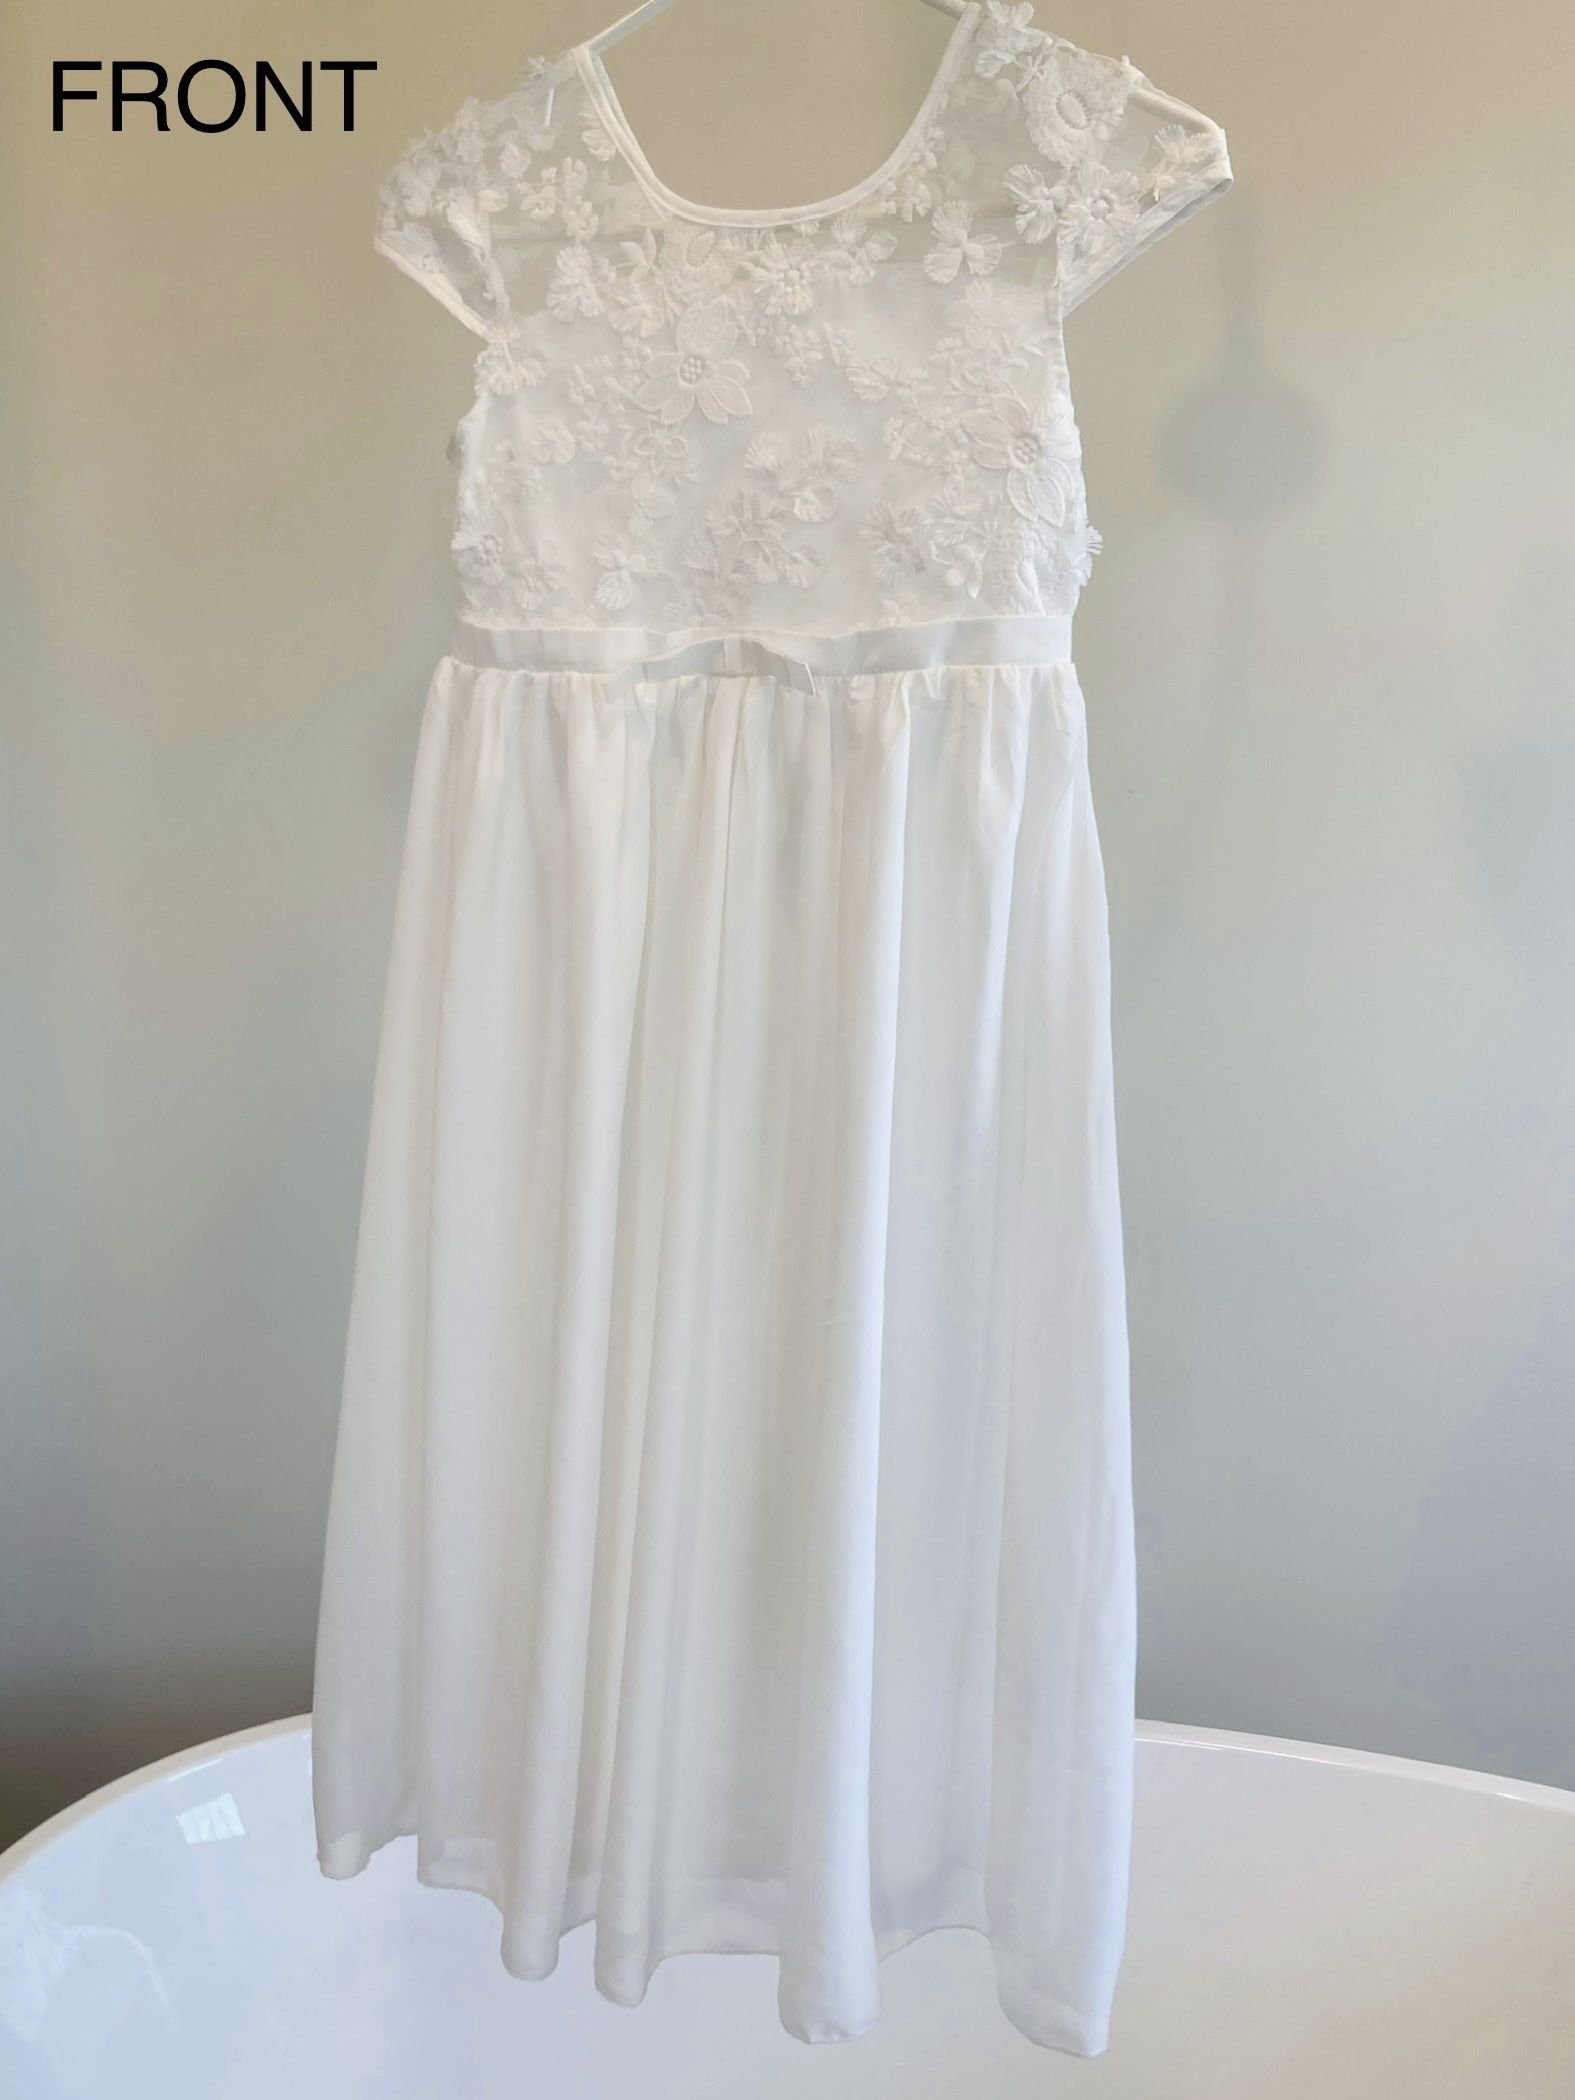 Girls’ White Baptism Or First Communion Dress sz 8